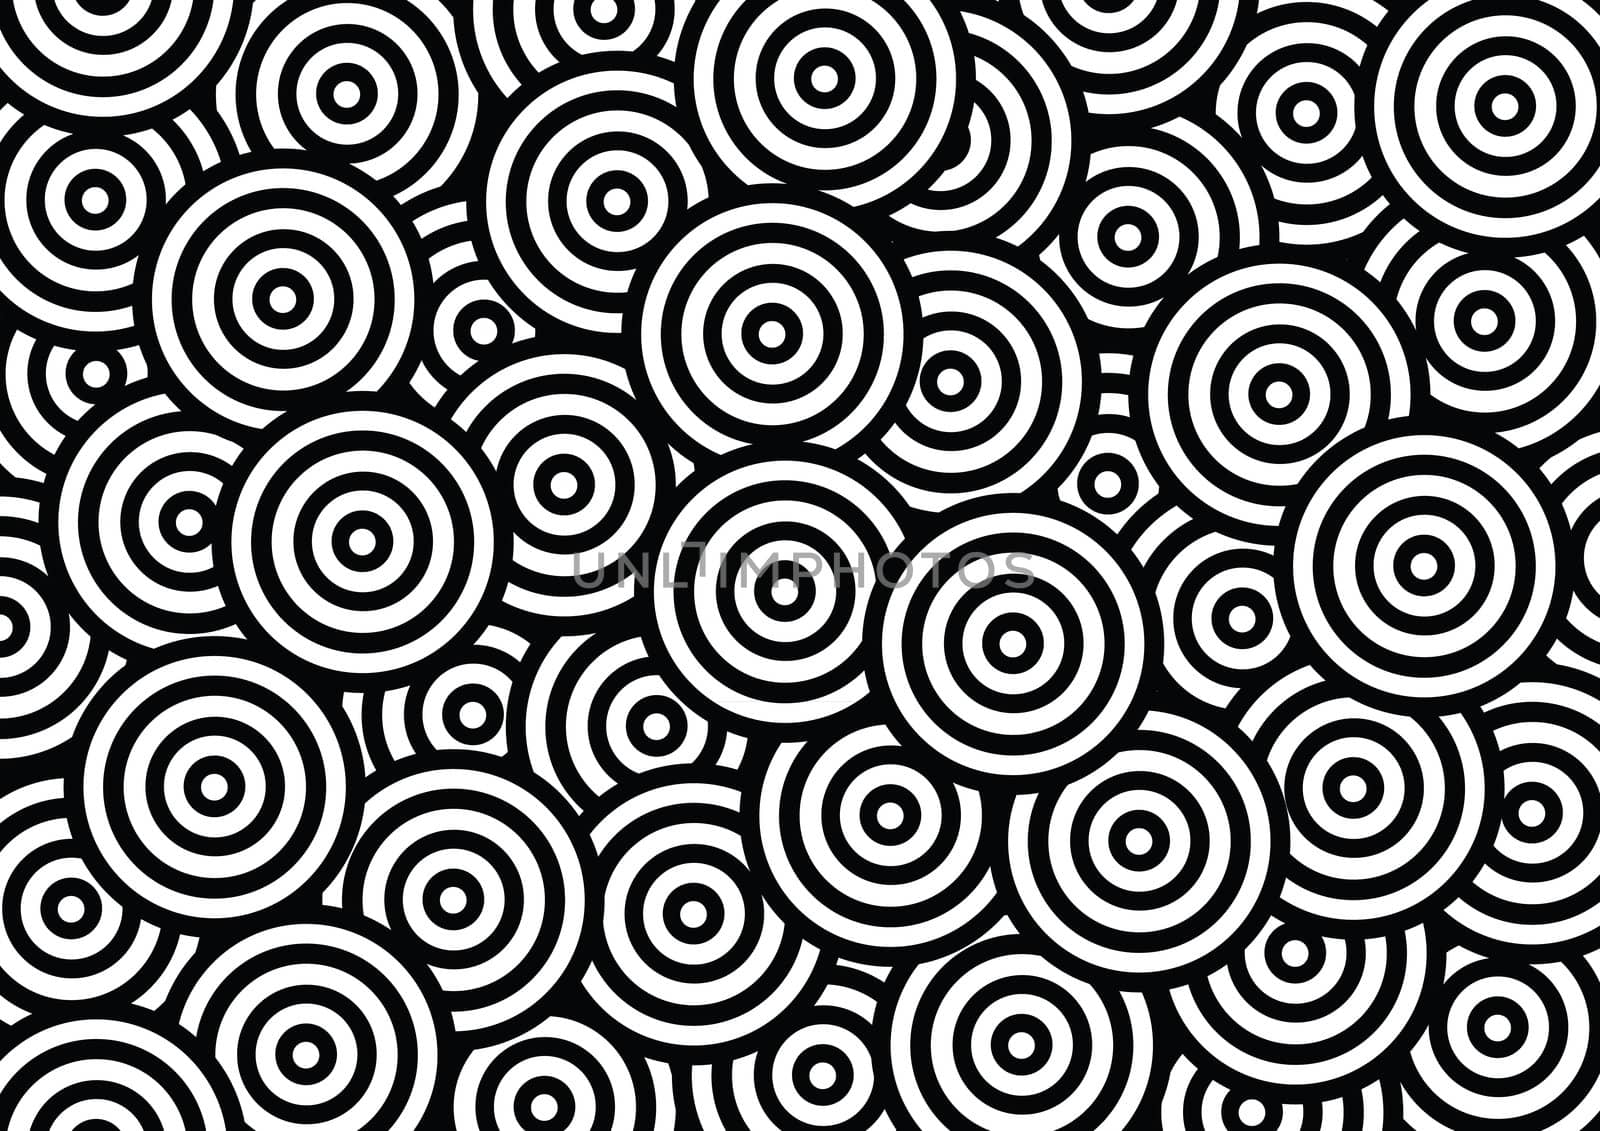 Circle pattern by gubgib